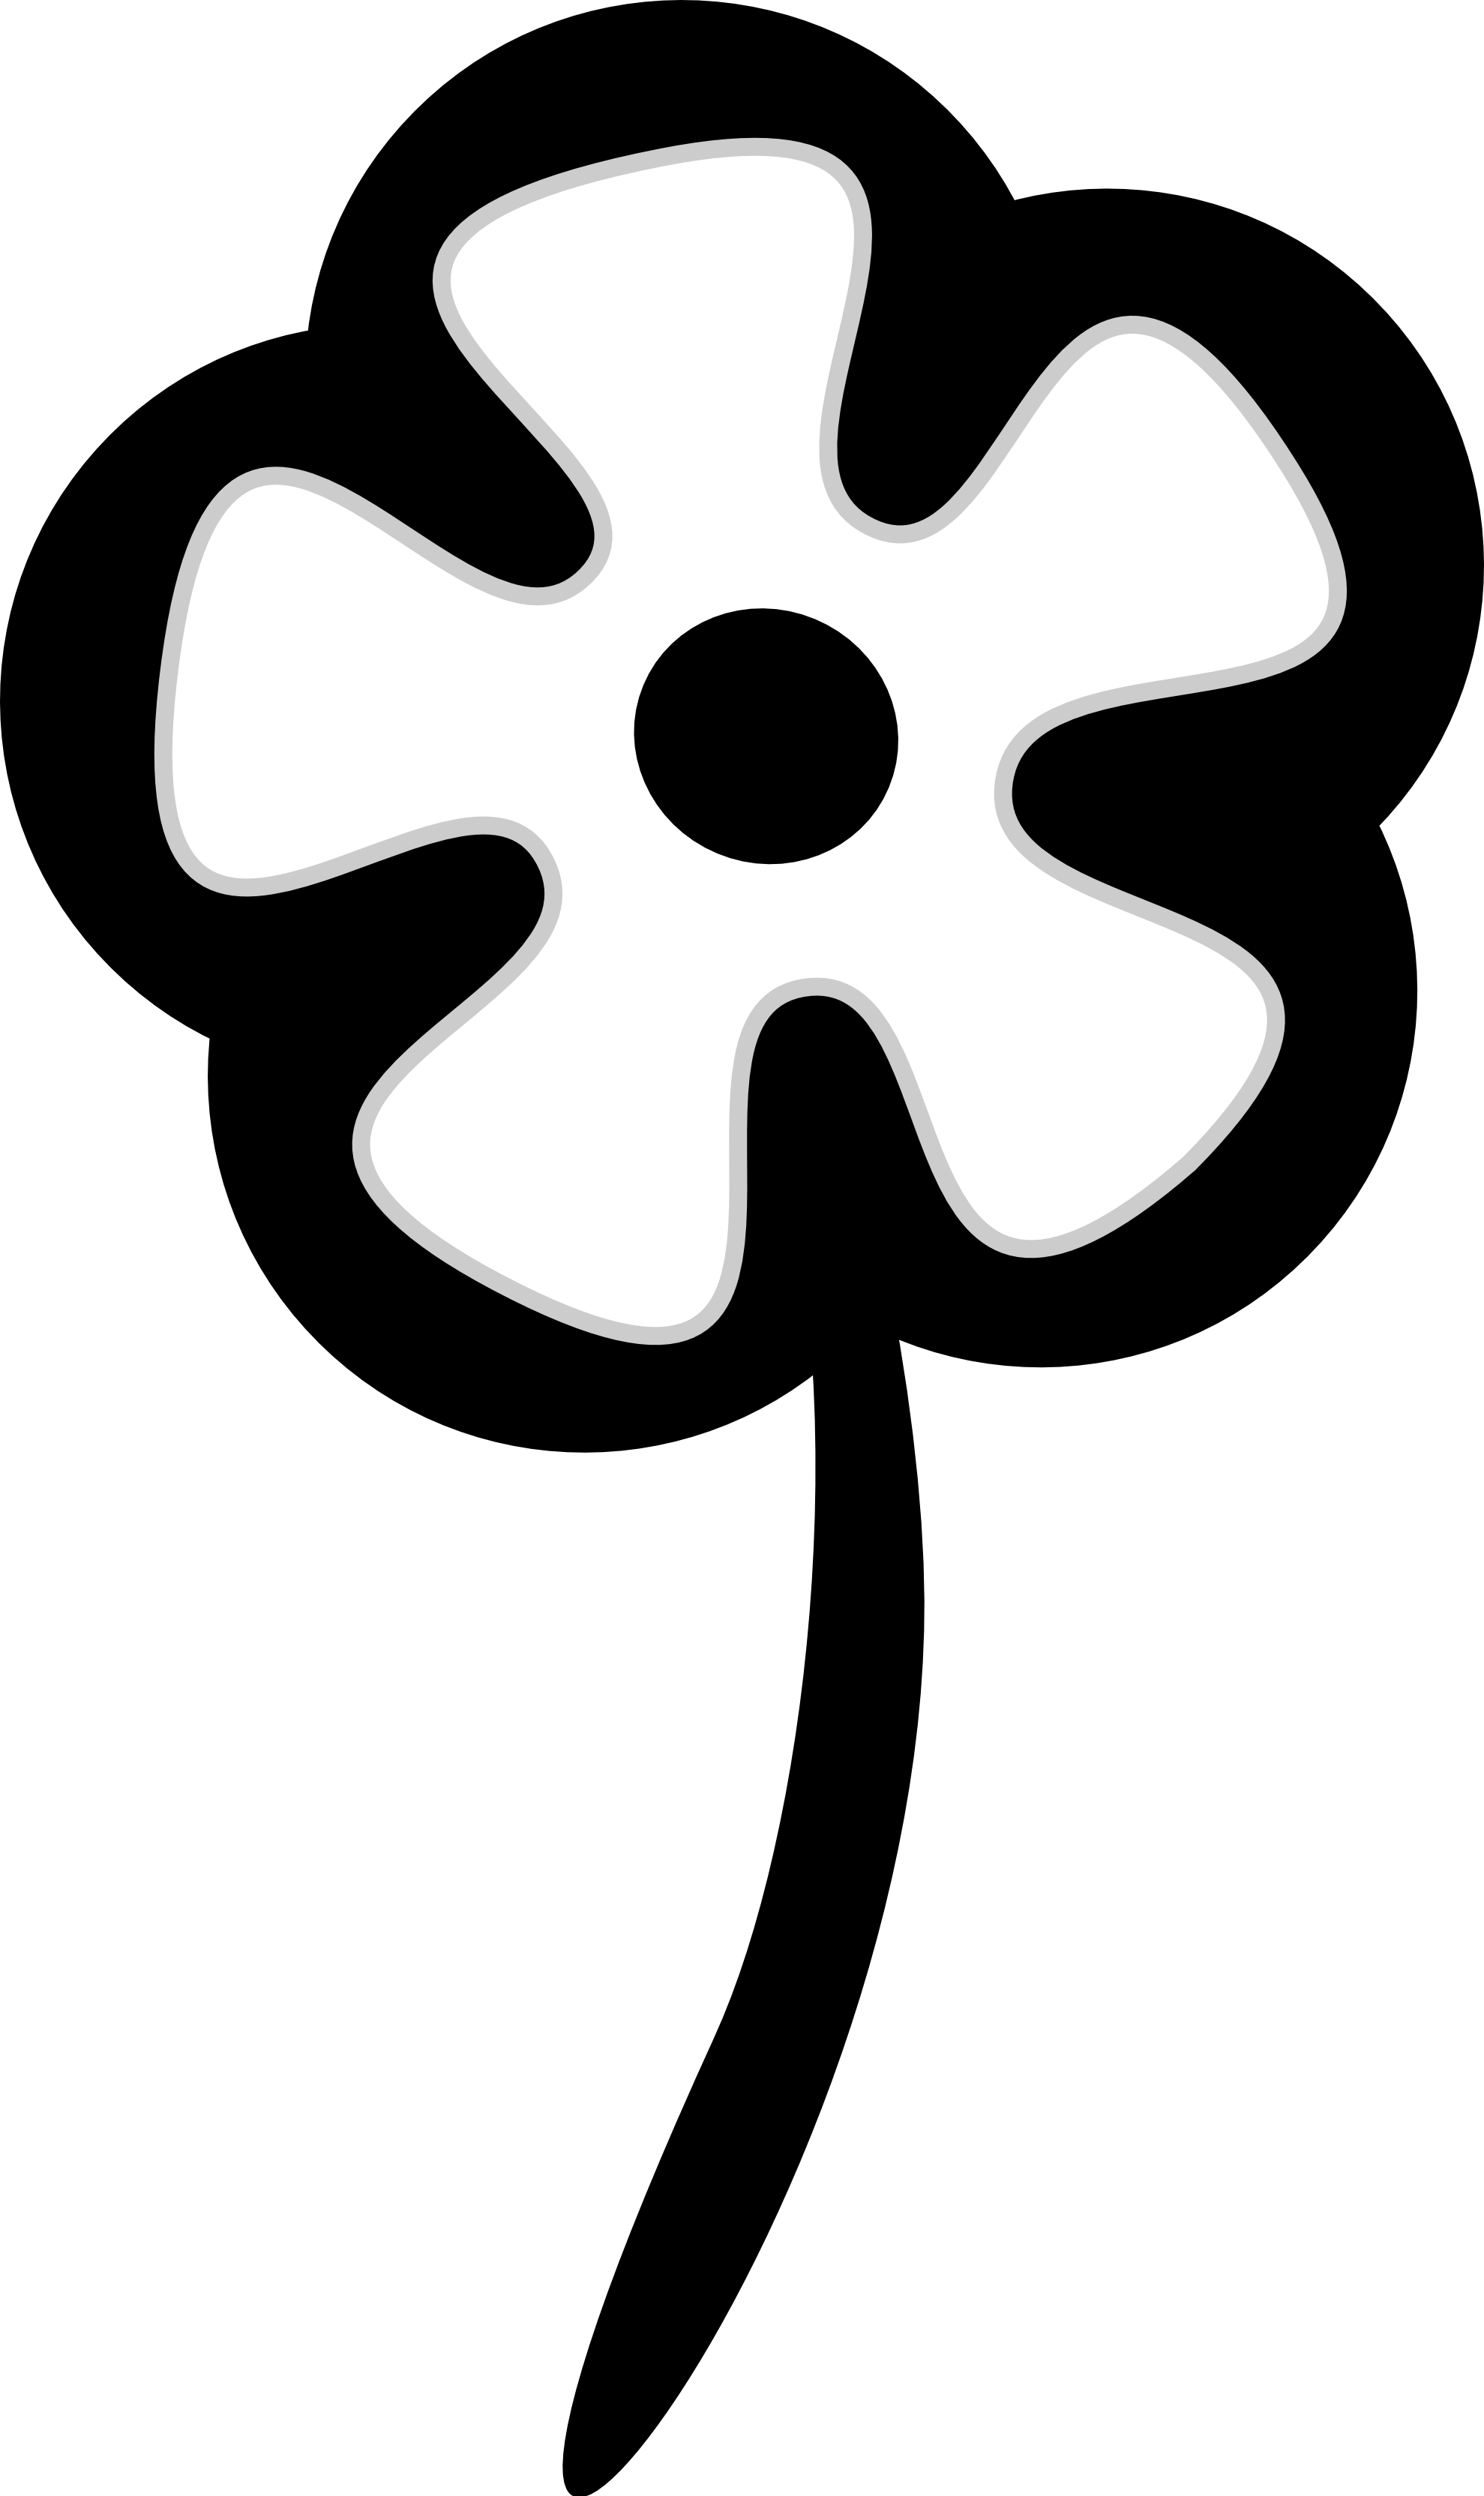 Easy Black and White Logo - Free Flower Images Black And White, Download Free Clip Art, Free ...